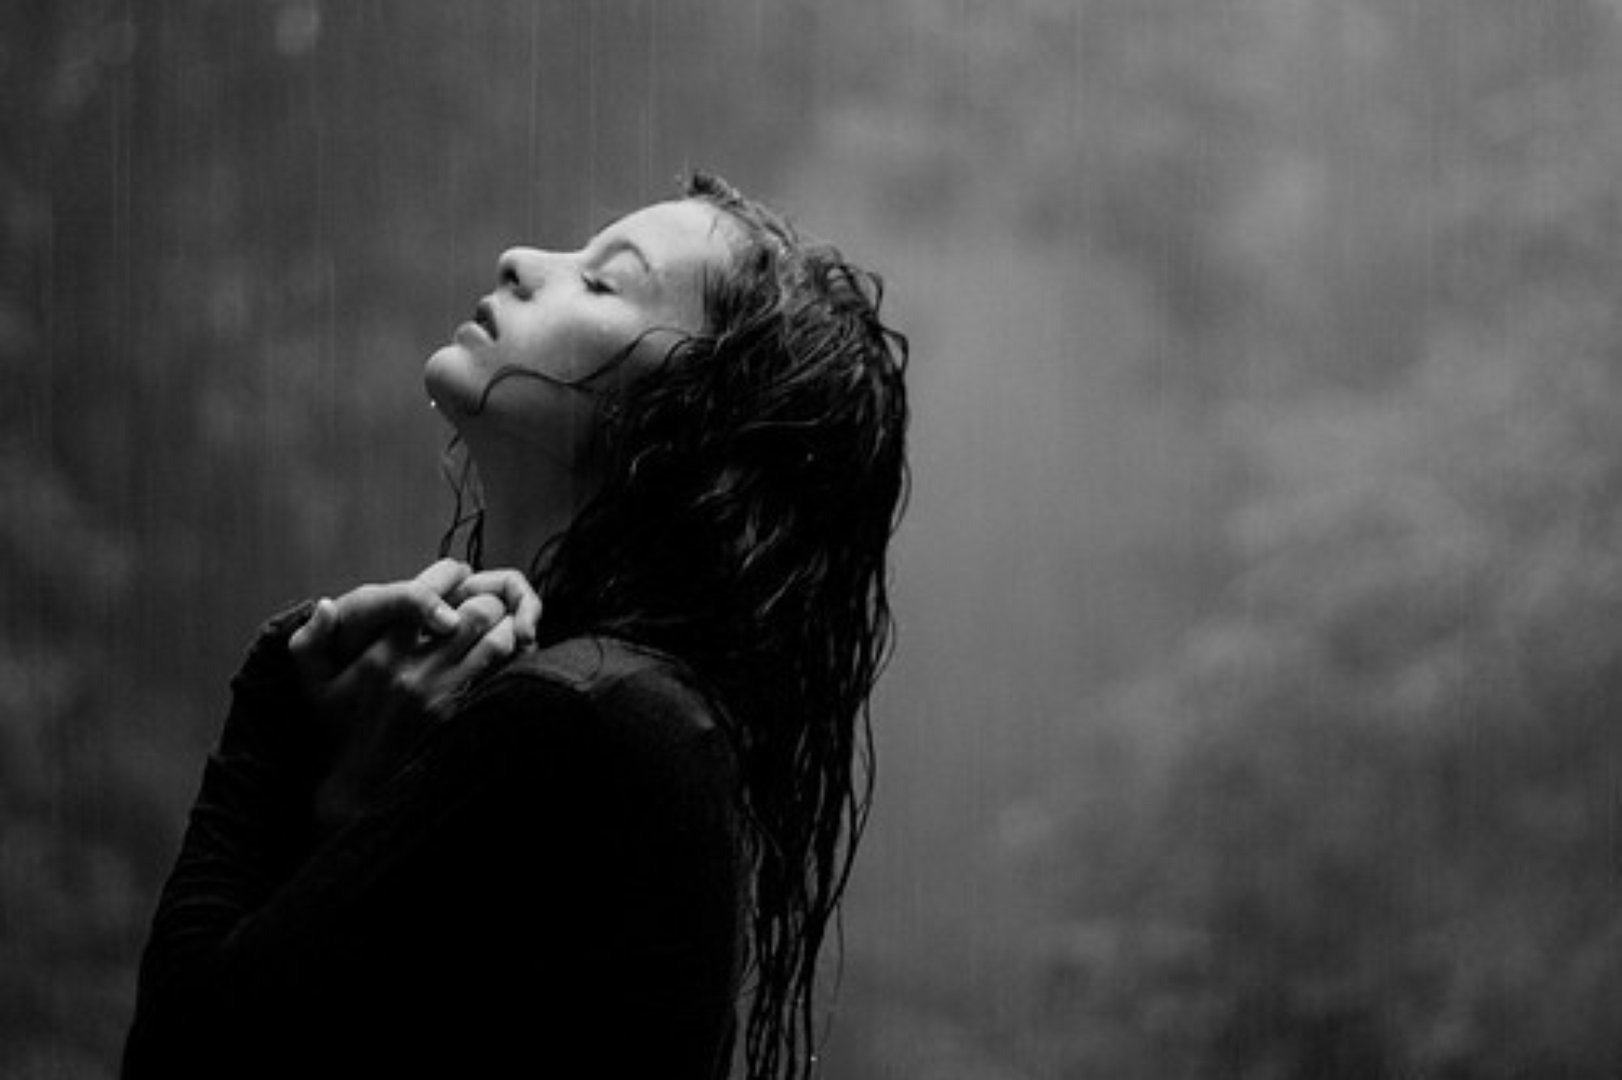 Сильно орала от боли. Девушка под дождем. Девушка в отчаянии. Девушка кричит. Одинокая девушка под дождем.